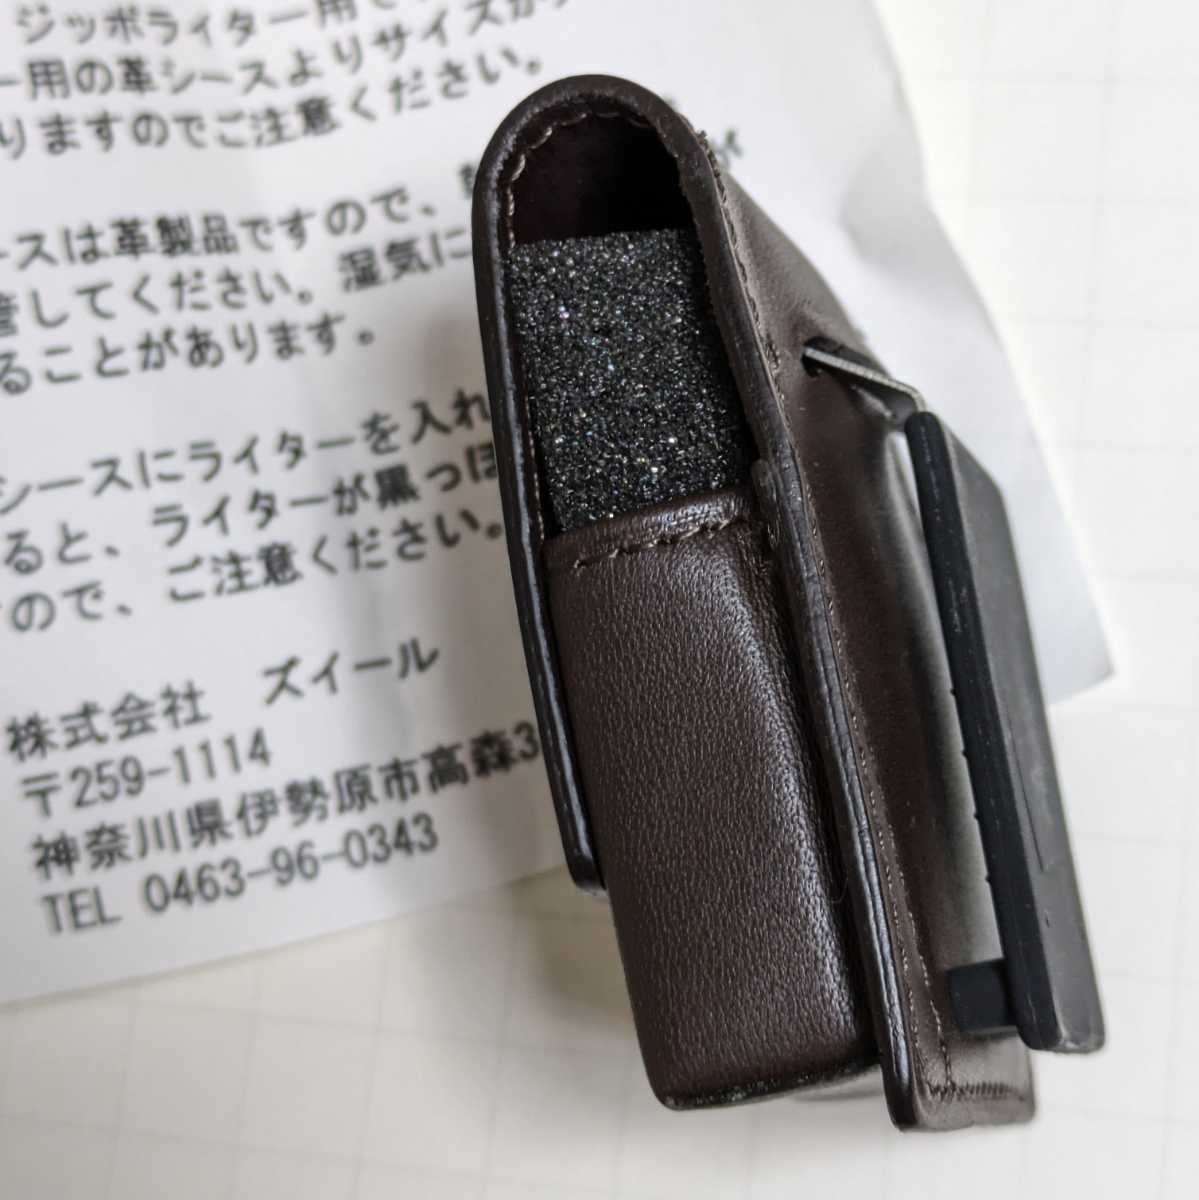 zi-ru ashtray * Zippo - lighter leather sheath ( case )* line cutter set / unused /ZEAL